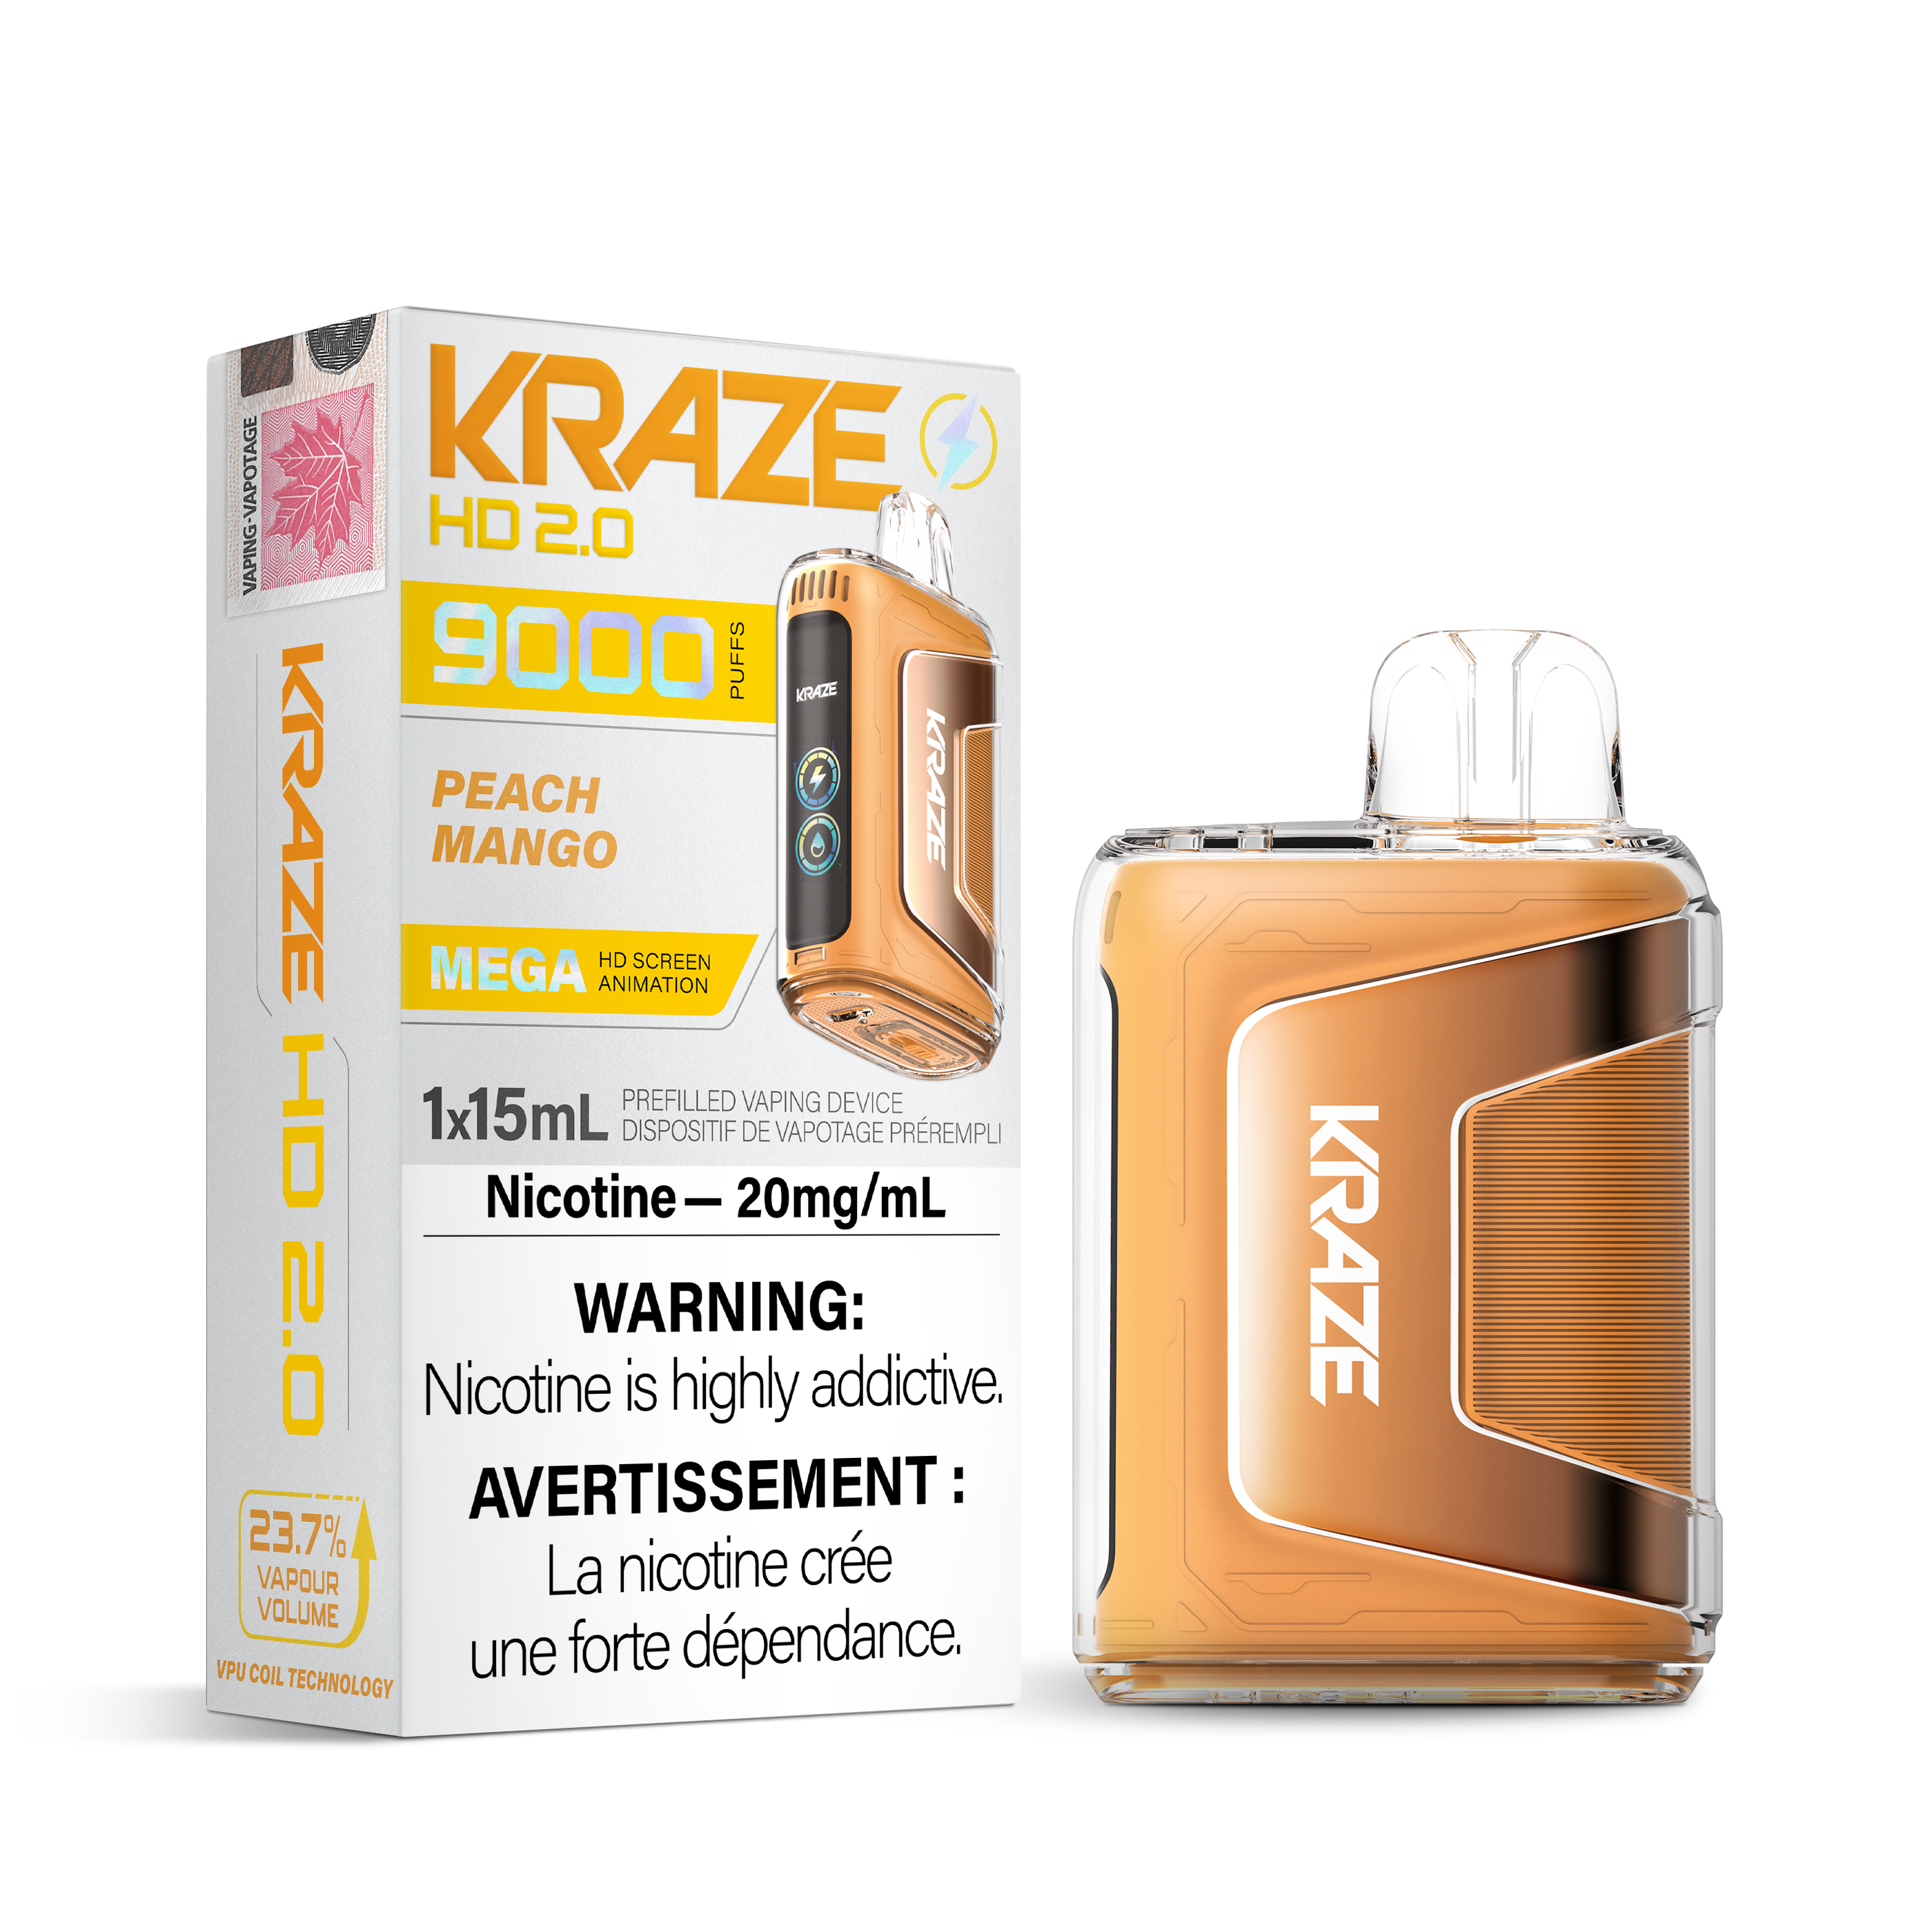 KRAZE HD 2.0 9000 PEACH MANGO 20MG